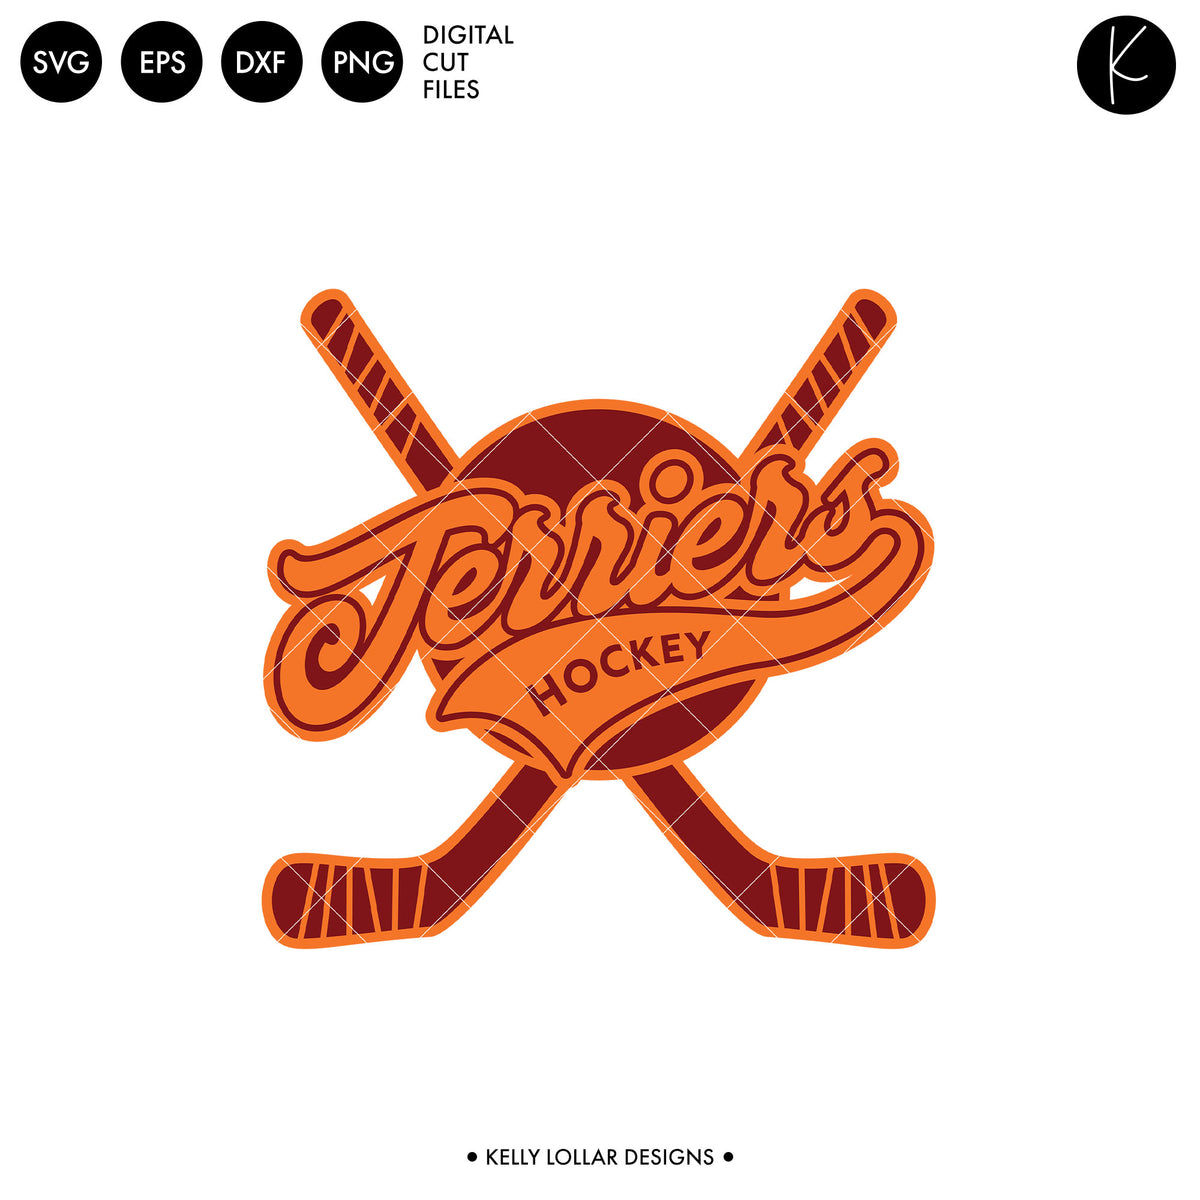 Terriers Hockey Bundle | SVG DXF EPS PNG Cut Files